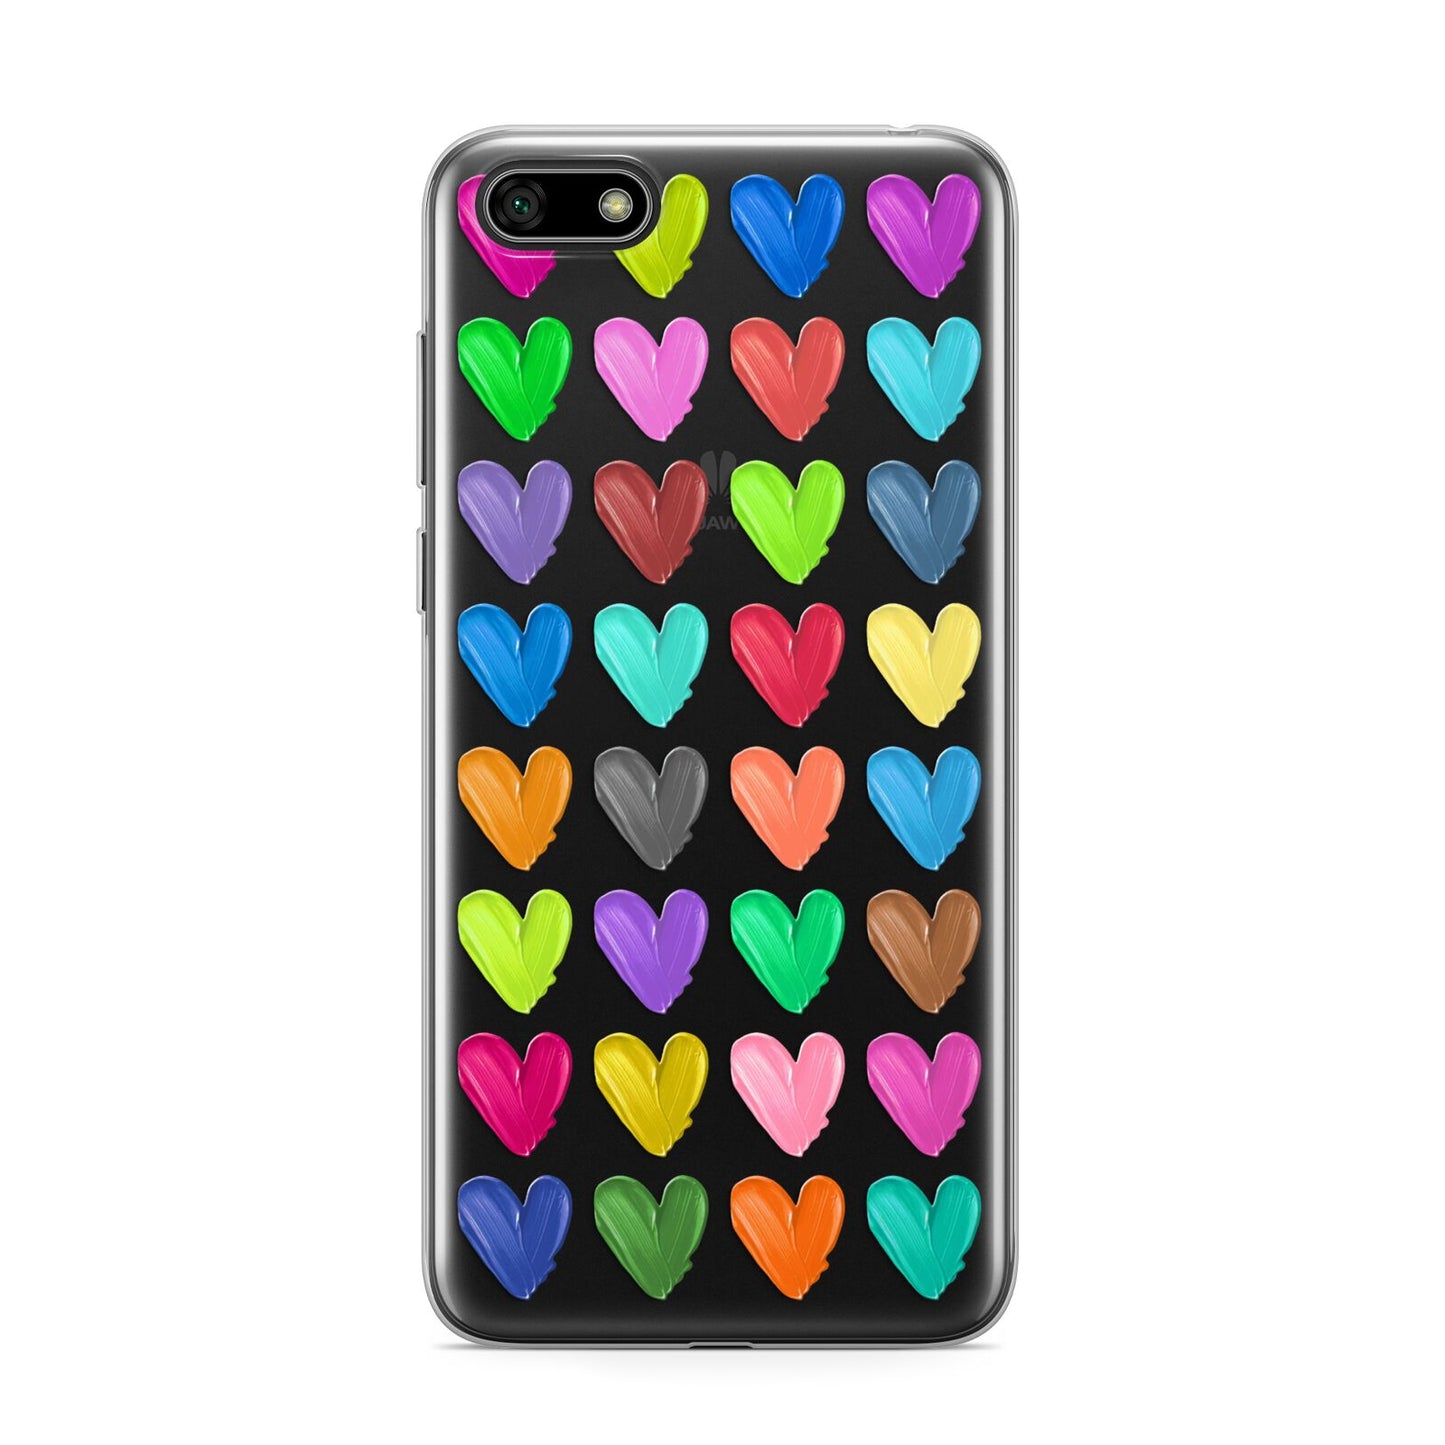 Polka Heart Huawei Y5 Prime 2018 Phone Case